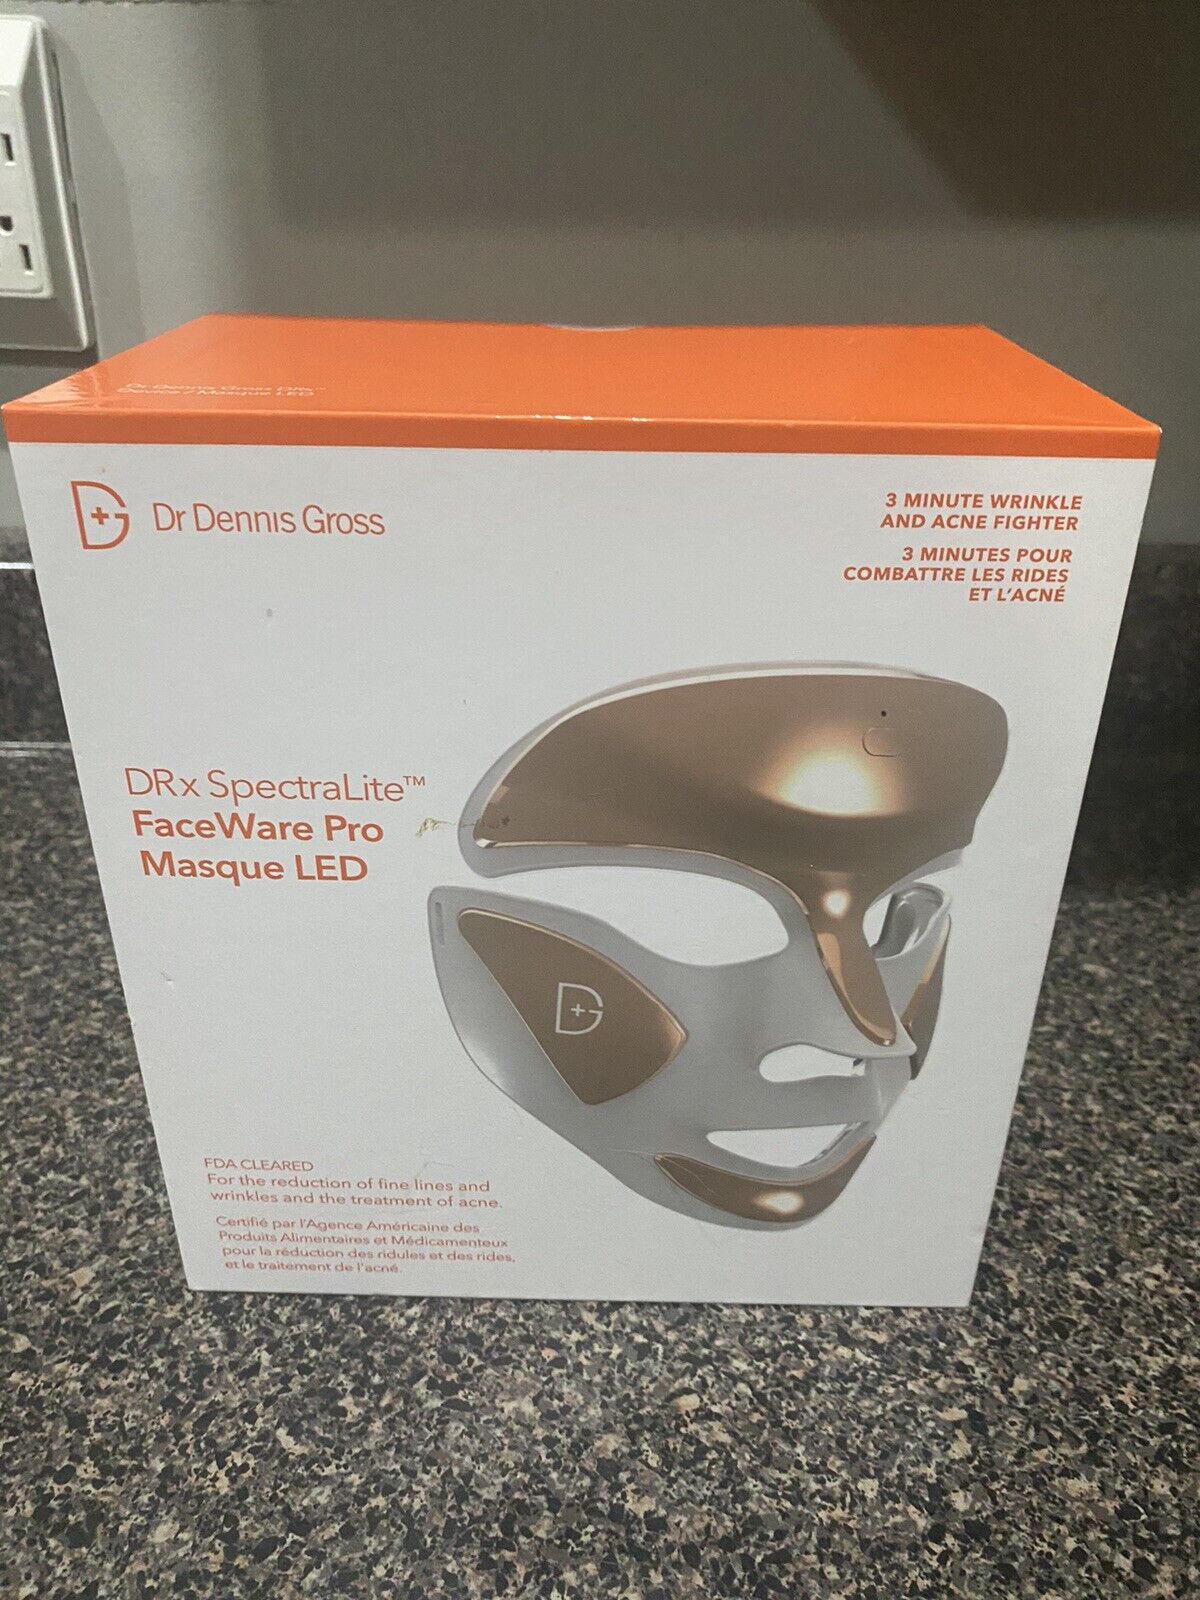 Dr. Dennis Gross DRx SpectraLite Dpl FaceWare Pro Masque LED … NEW OPEN BOX